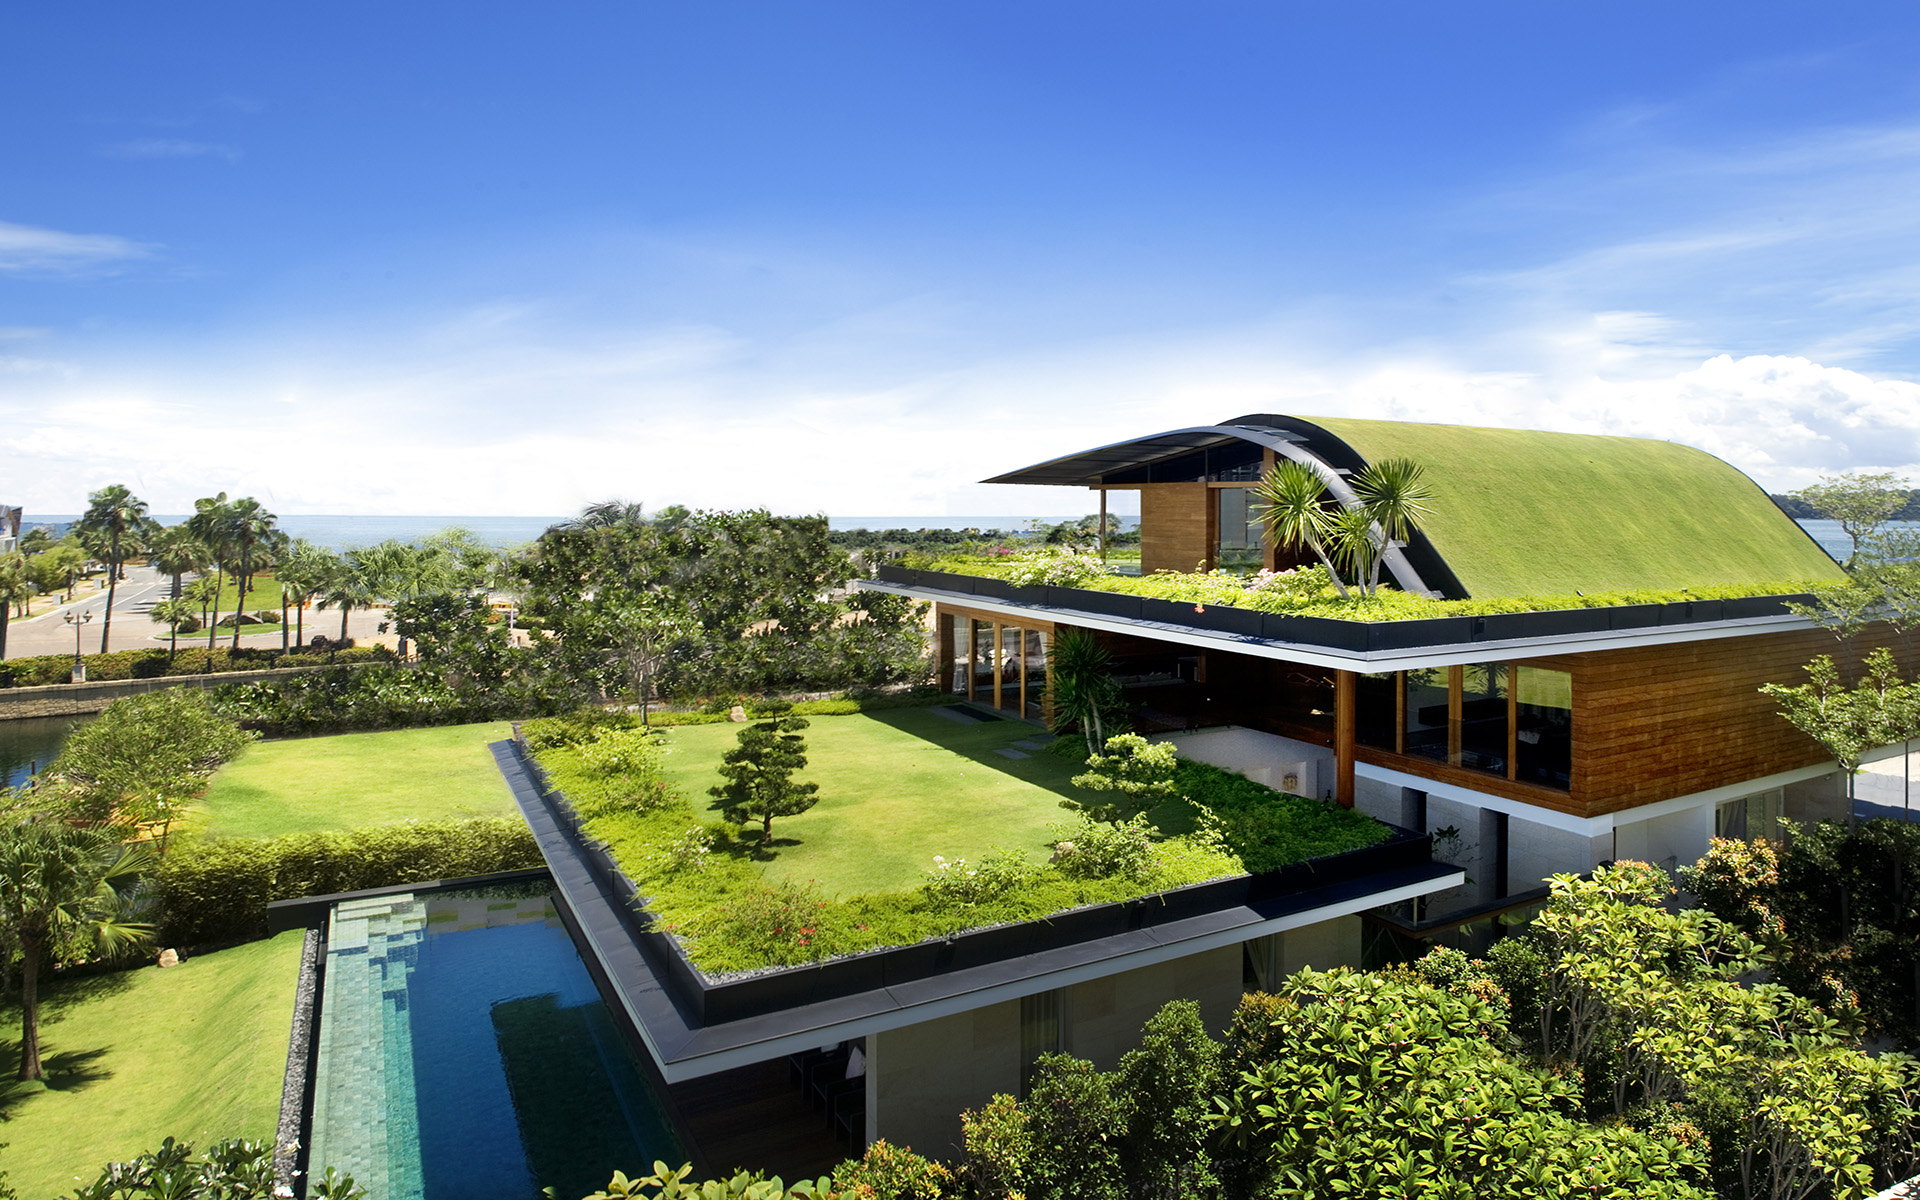 MEERA SKY GARDEN HOUSE - Guz Architects Singapore, UK.